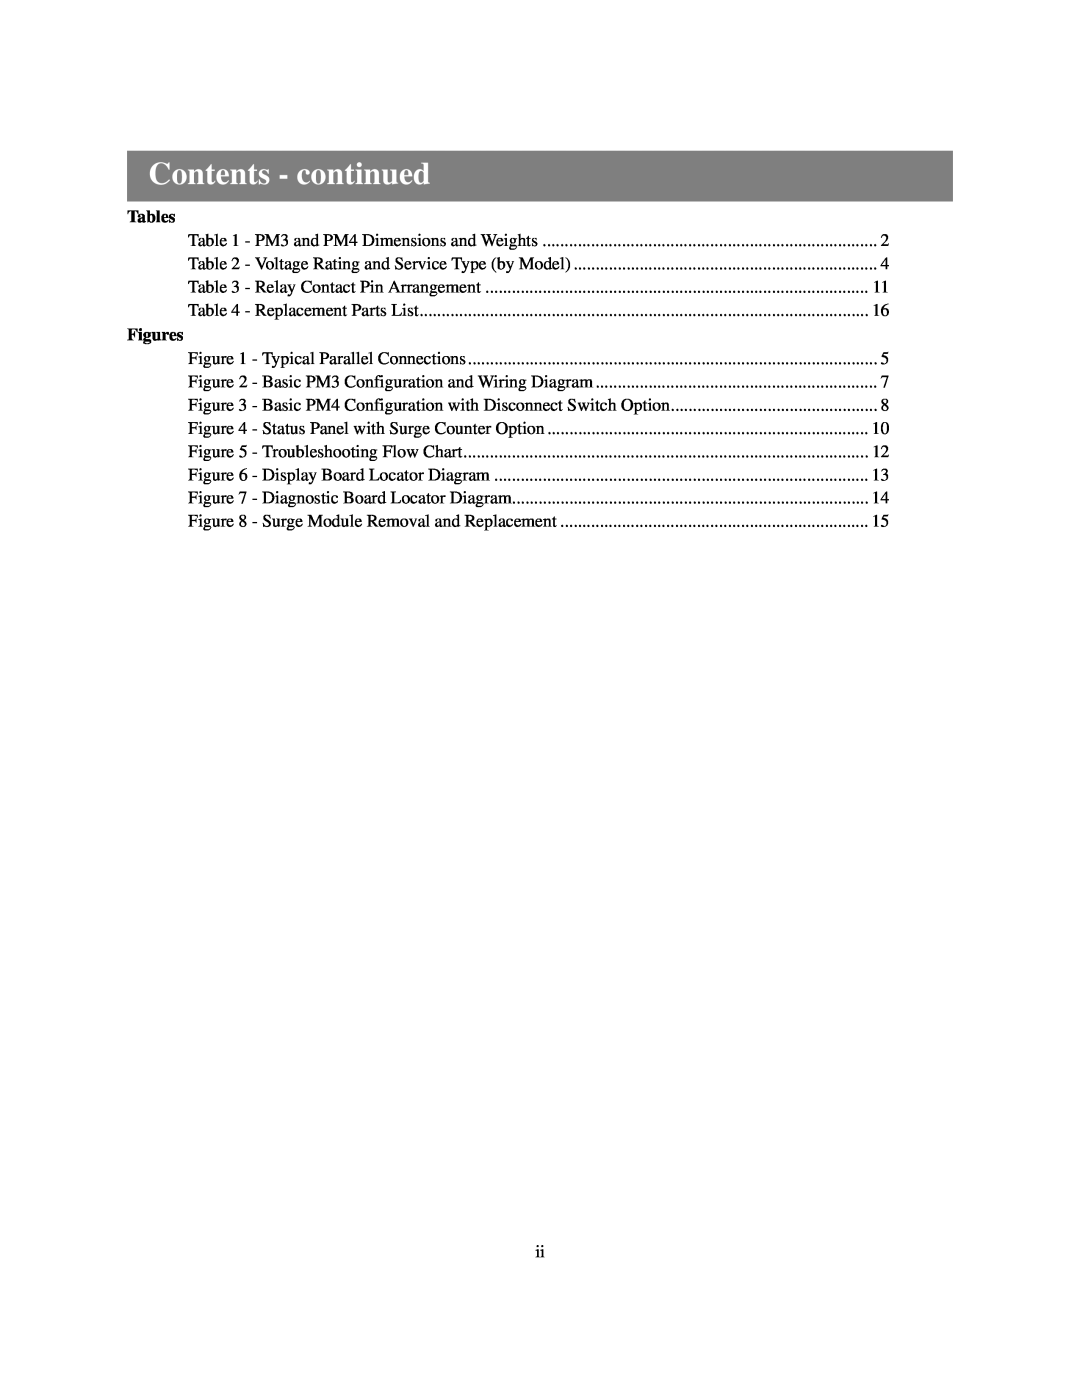 APC PM4 user manual Contents - continued, Tables, Figures 